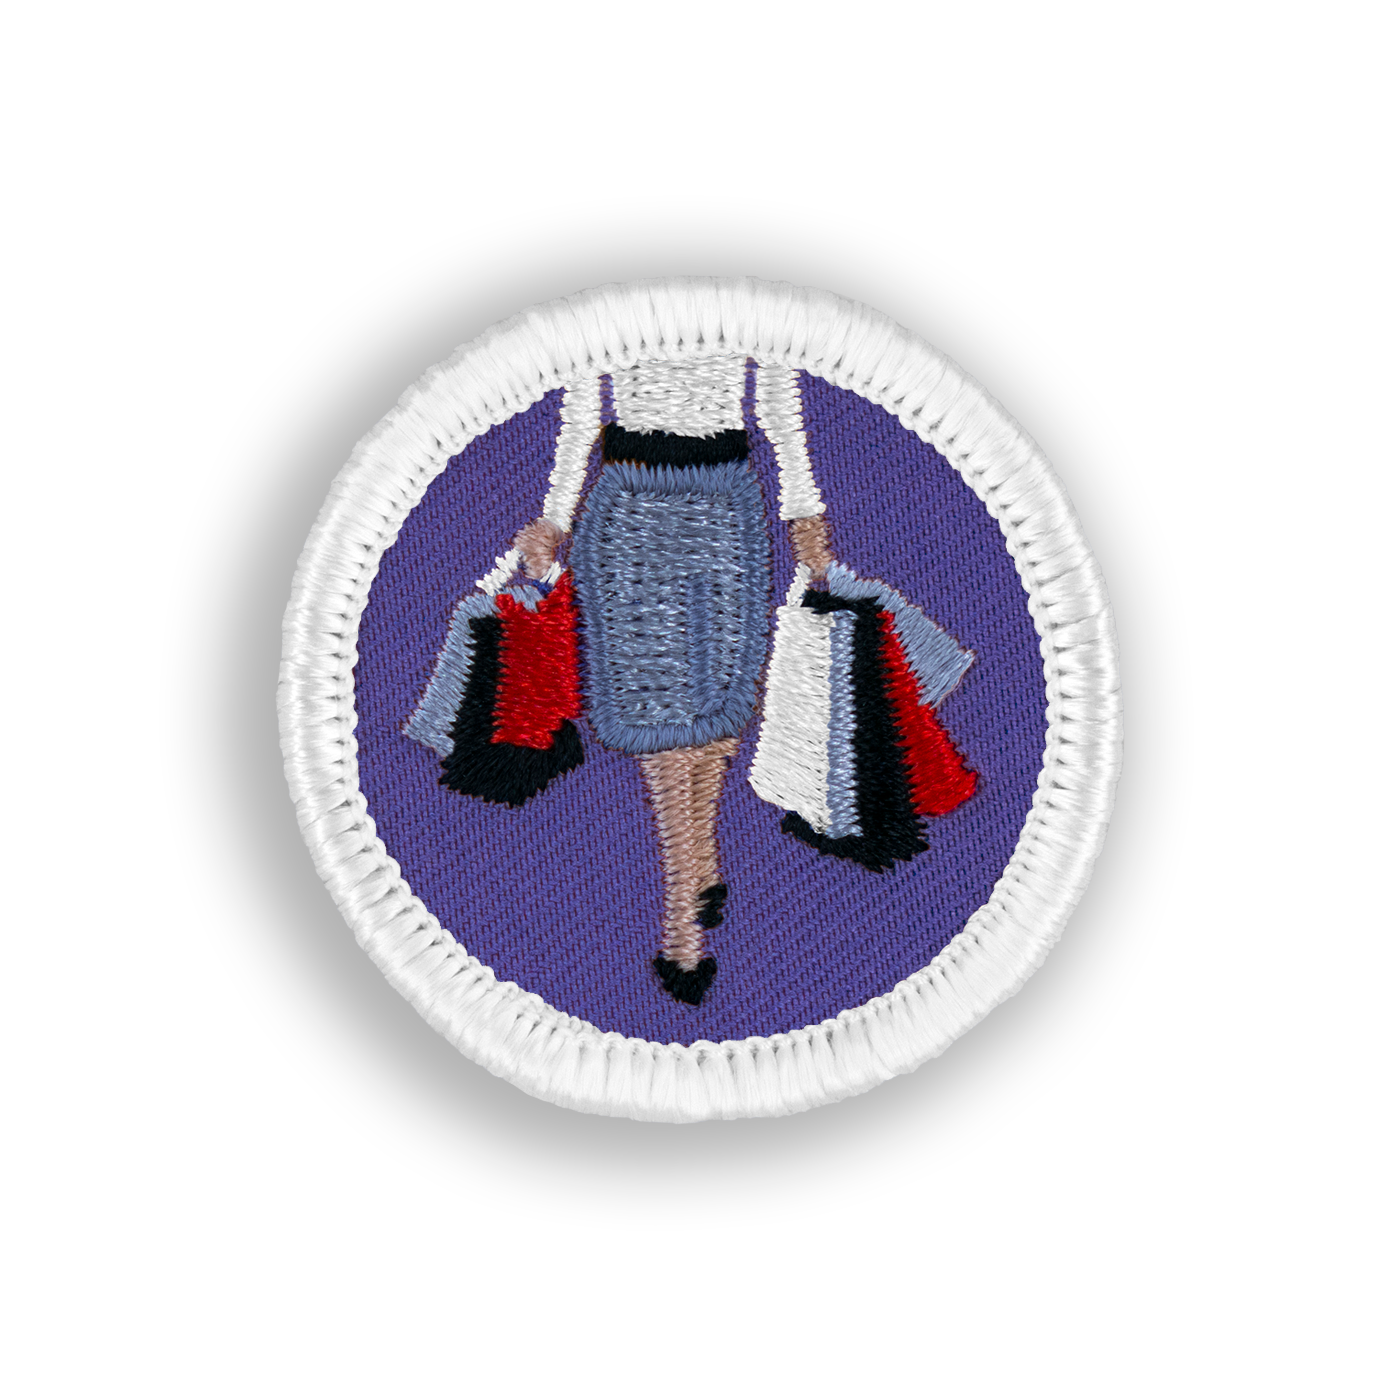 Shopaholic Patch | Demerit Wear - Fake Merit Badges